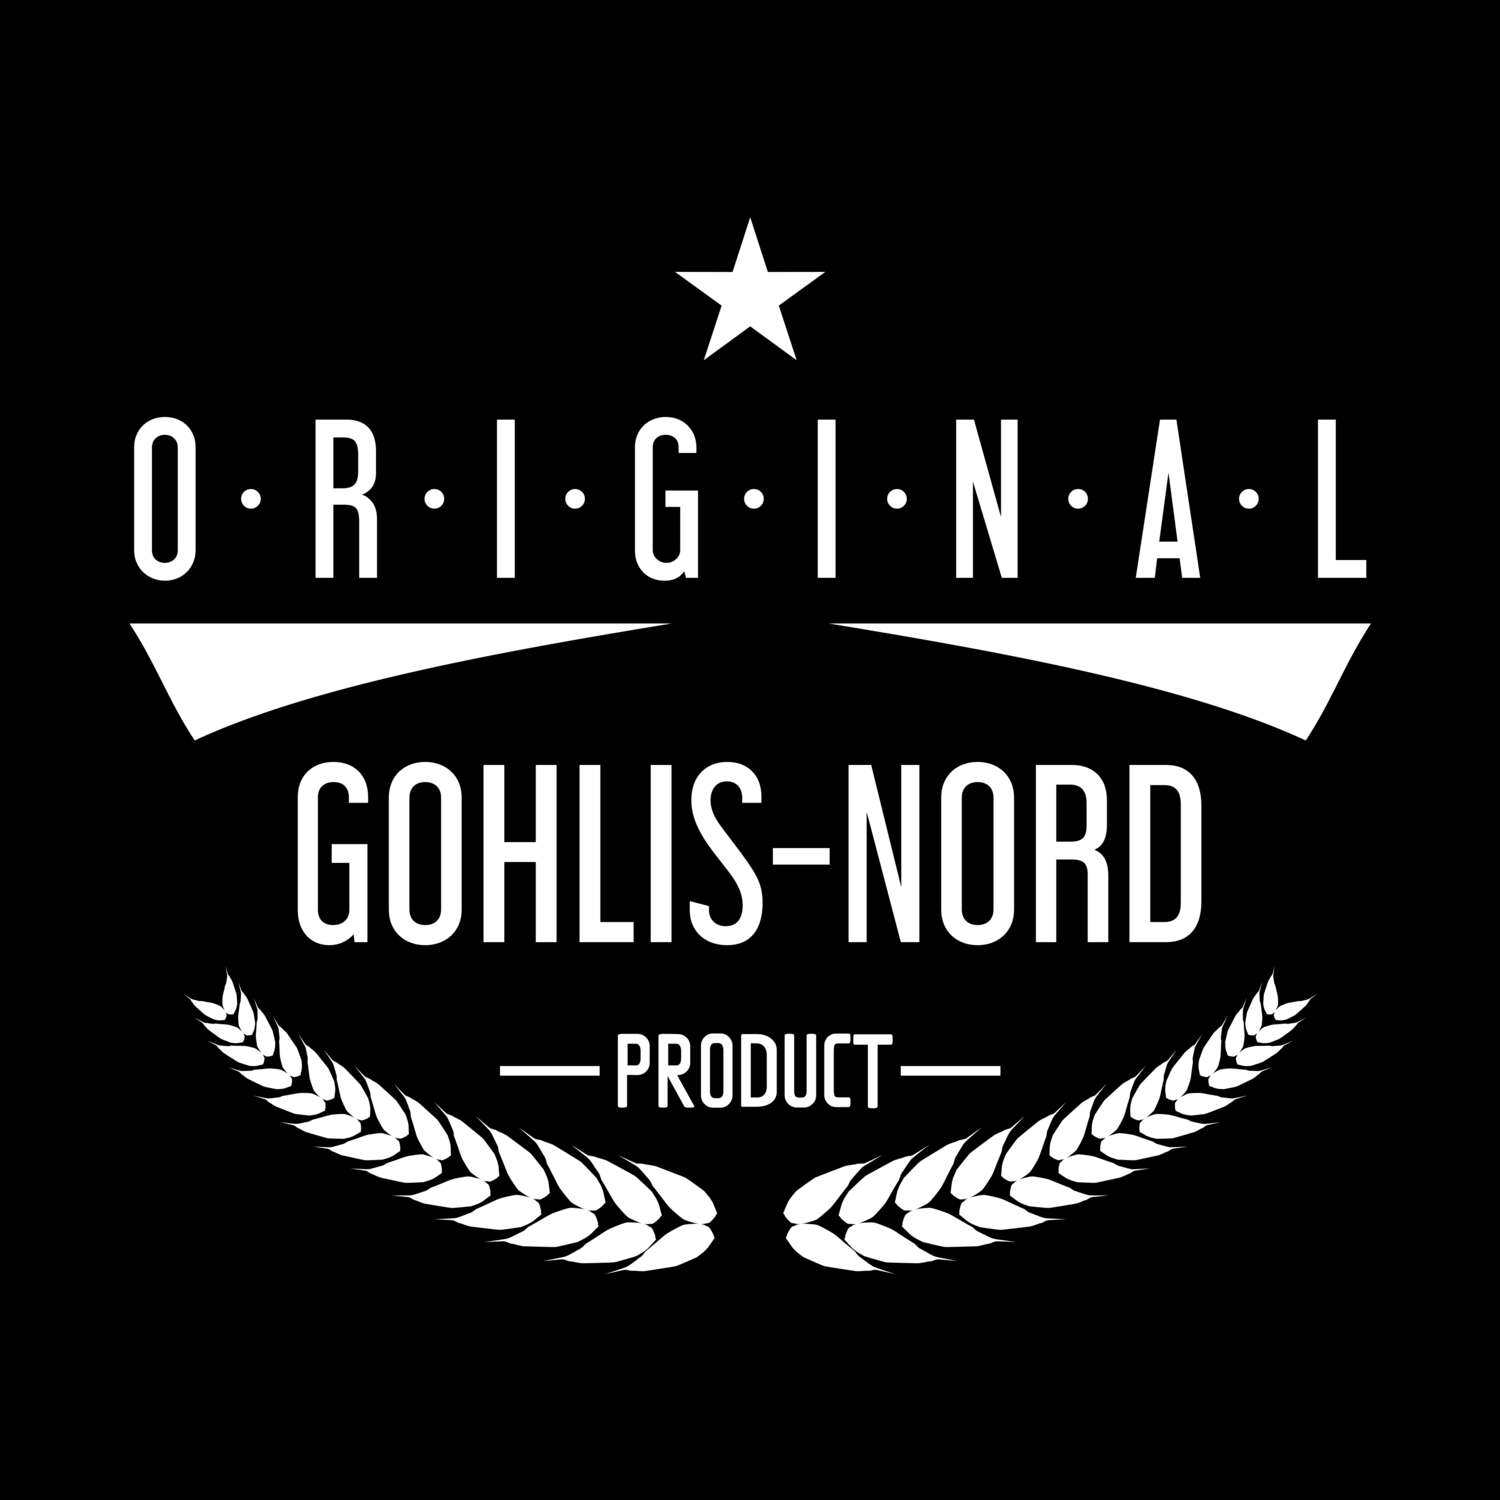 Gohlis-Nord T-Shirt »Original Product«